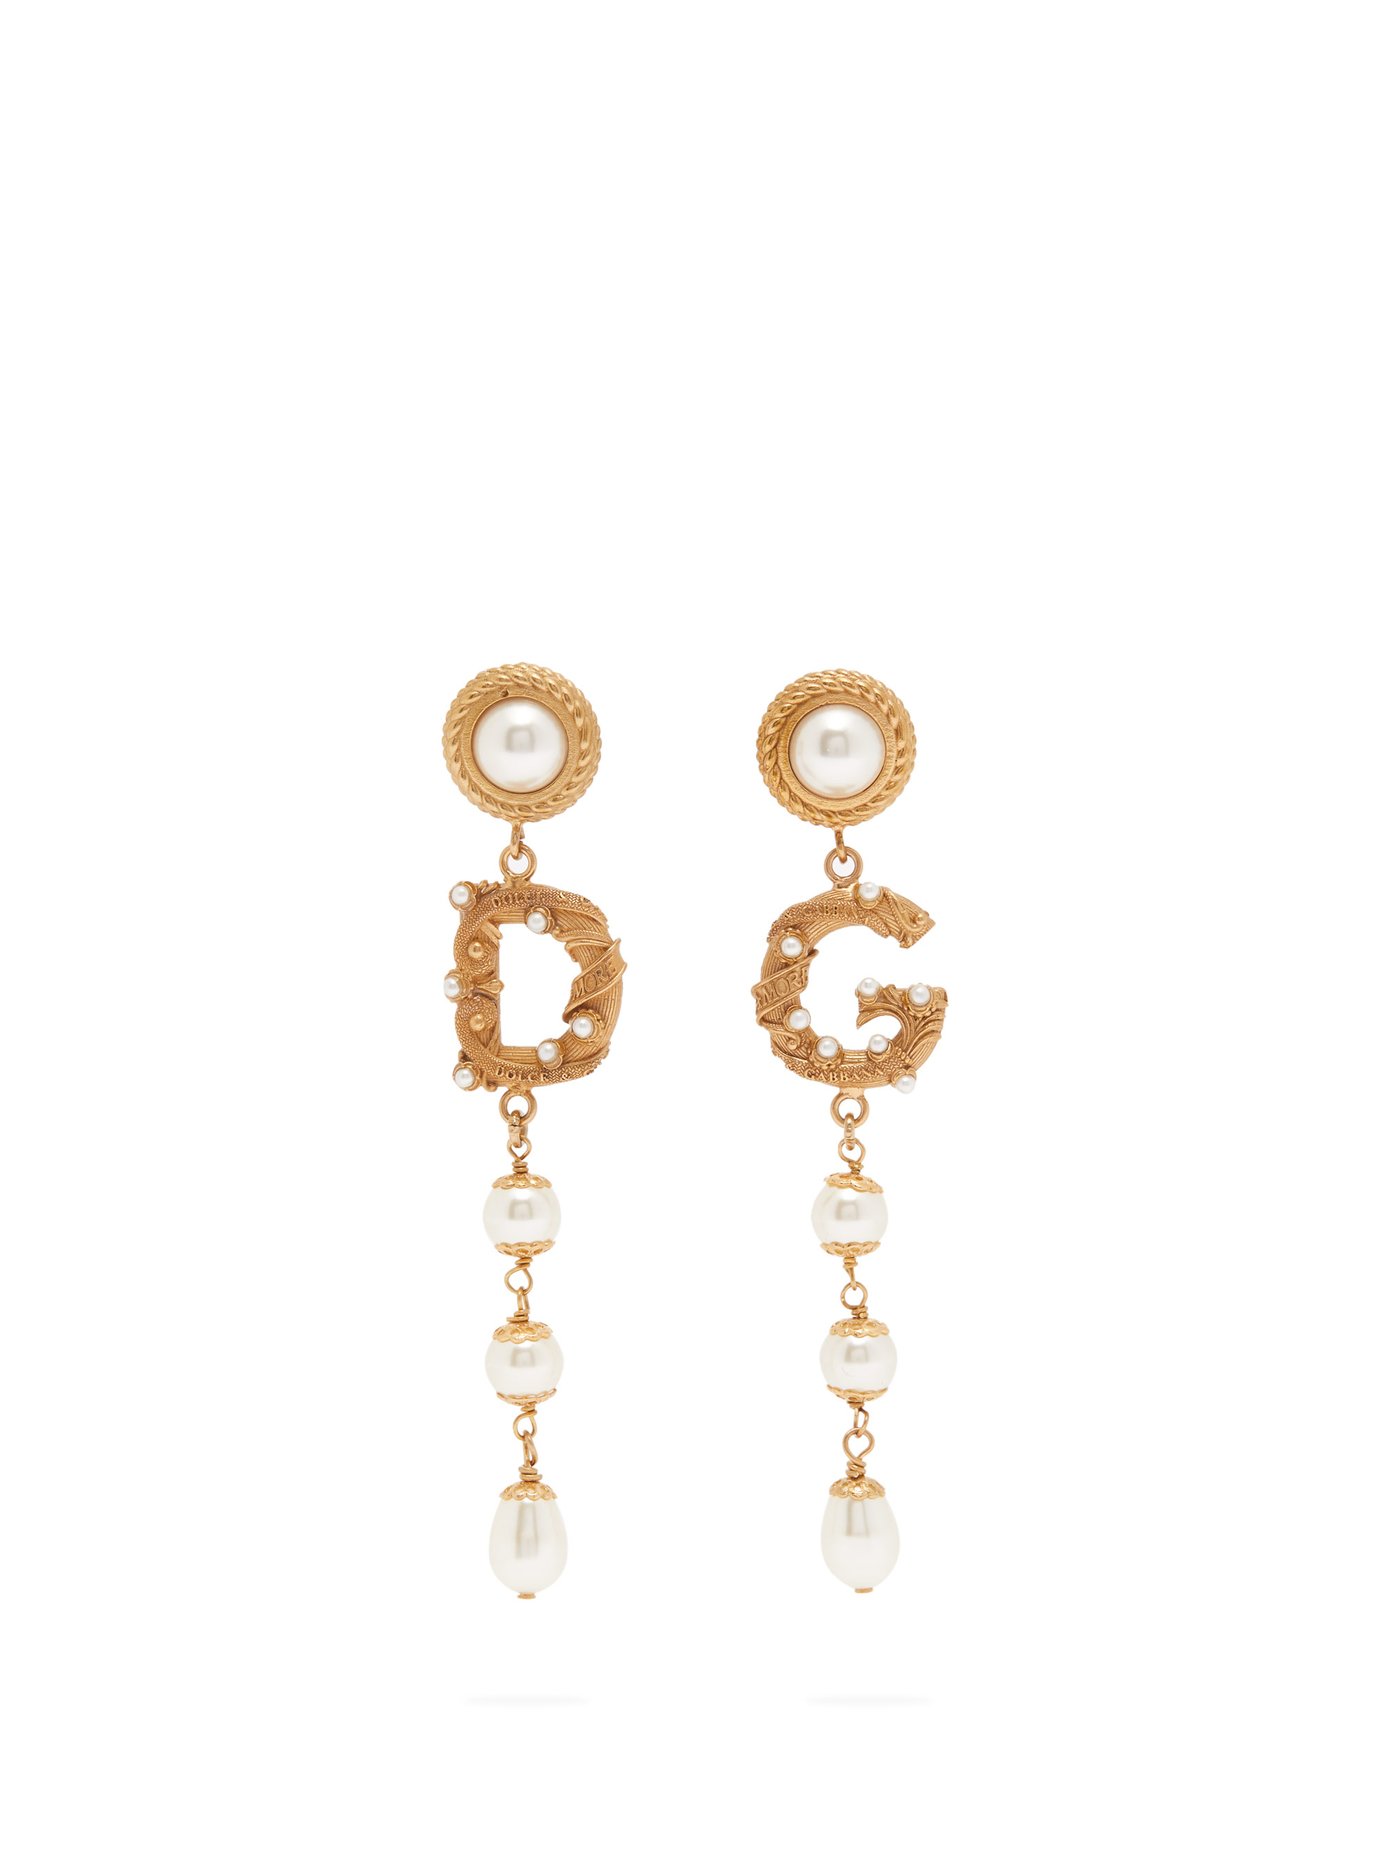 dolce and gabbana earrings sale